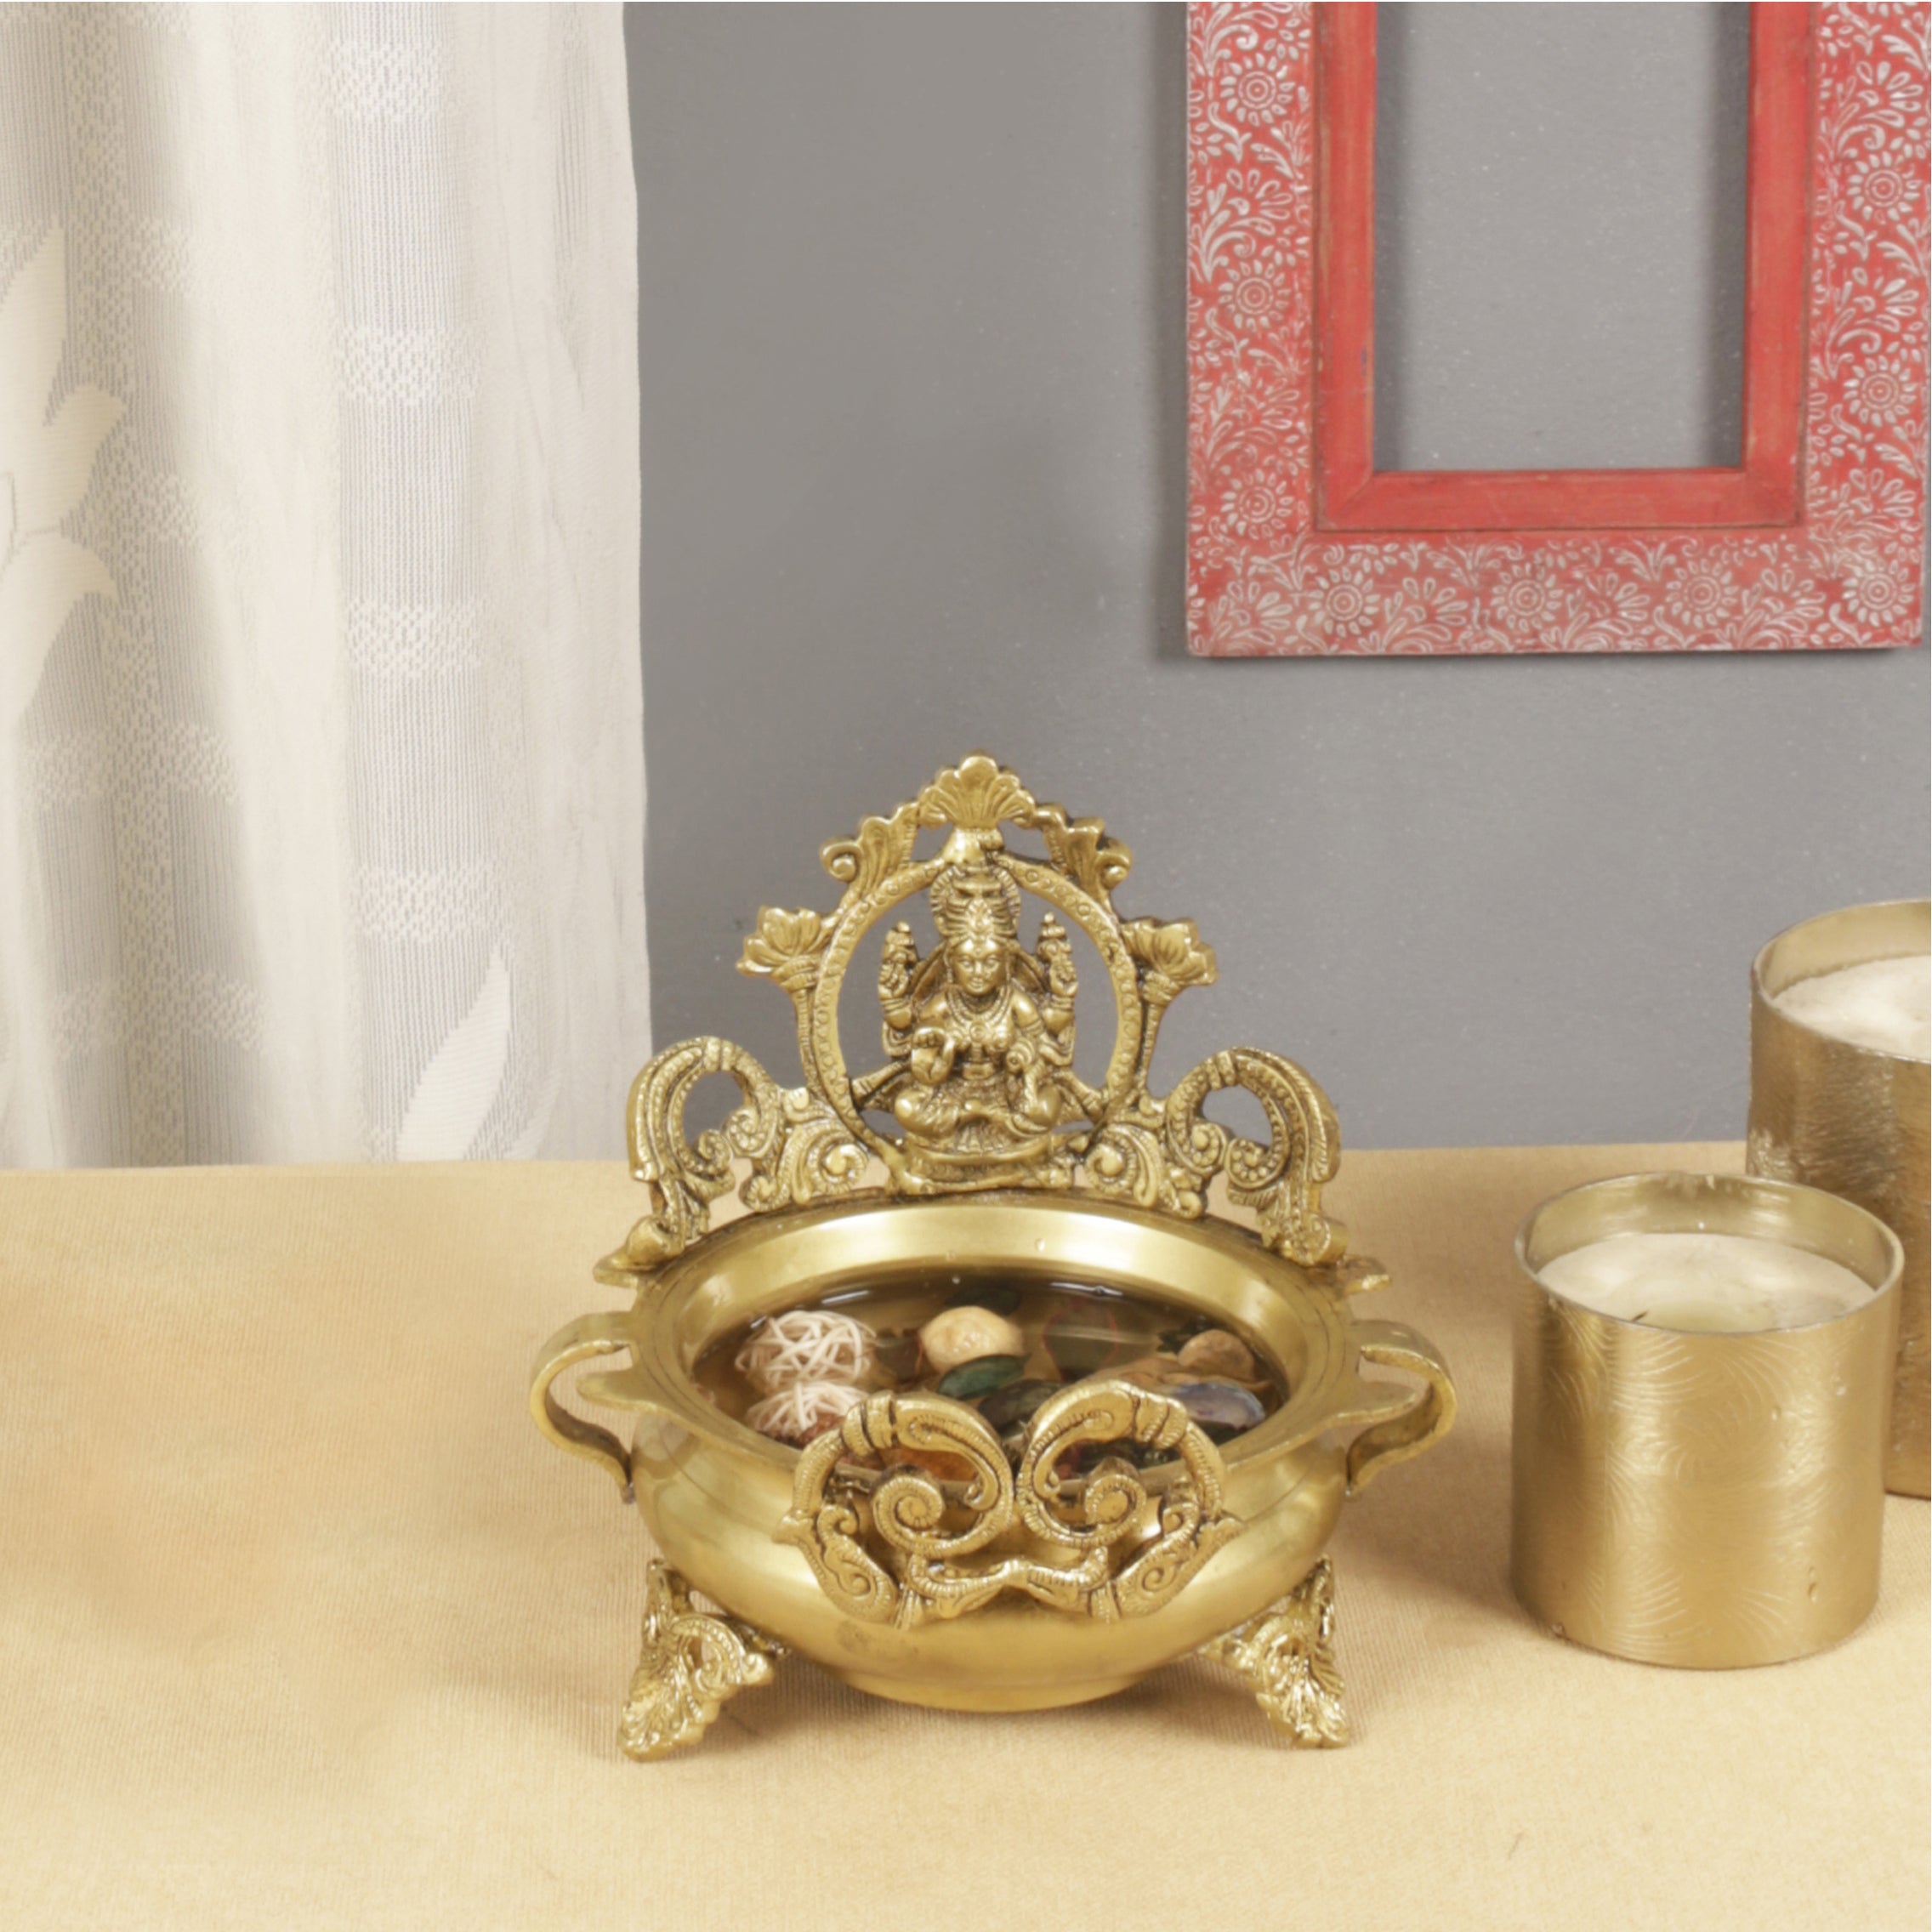 Brass Ethnic Indian Carved Laxmi Design 7 Inches Brass Urli Decor Bowl Showpiece